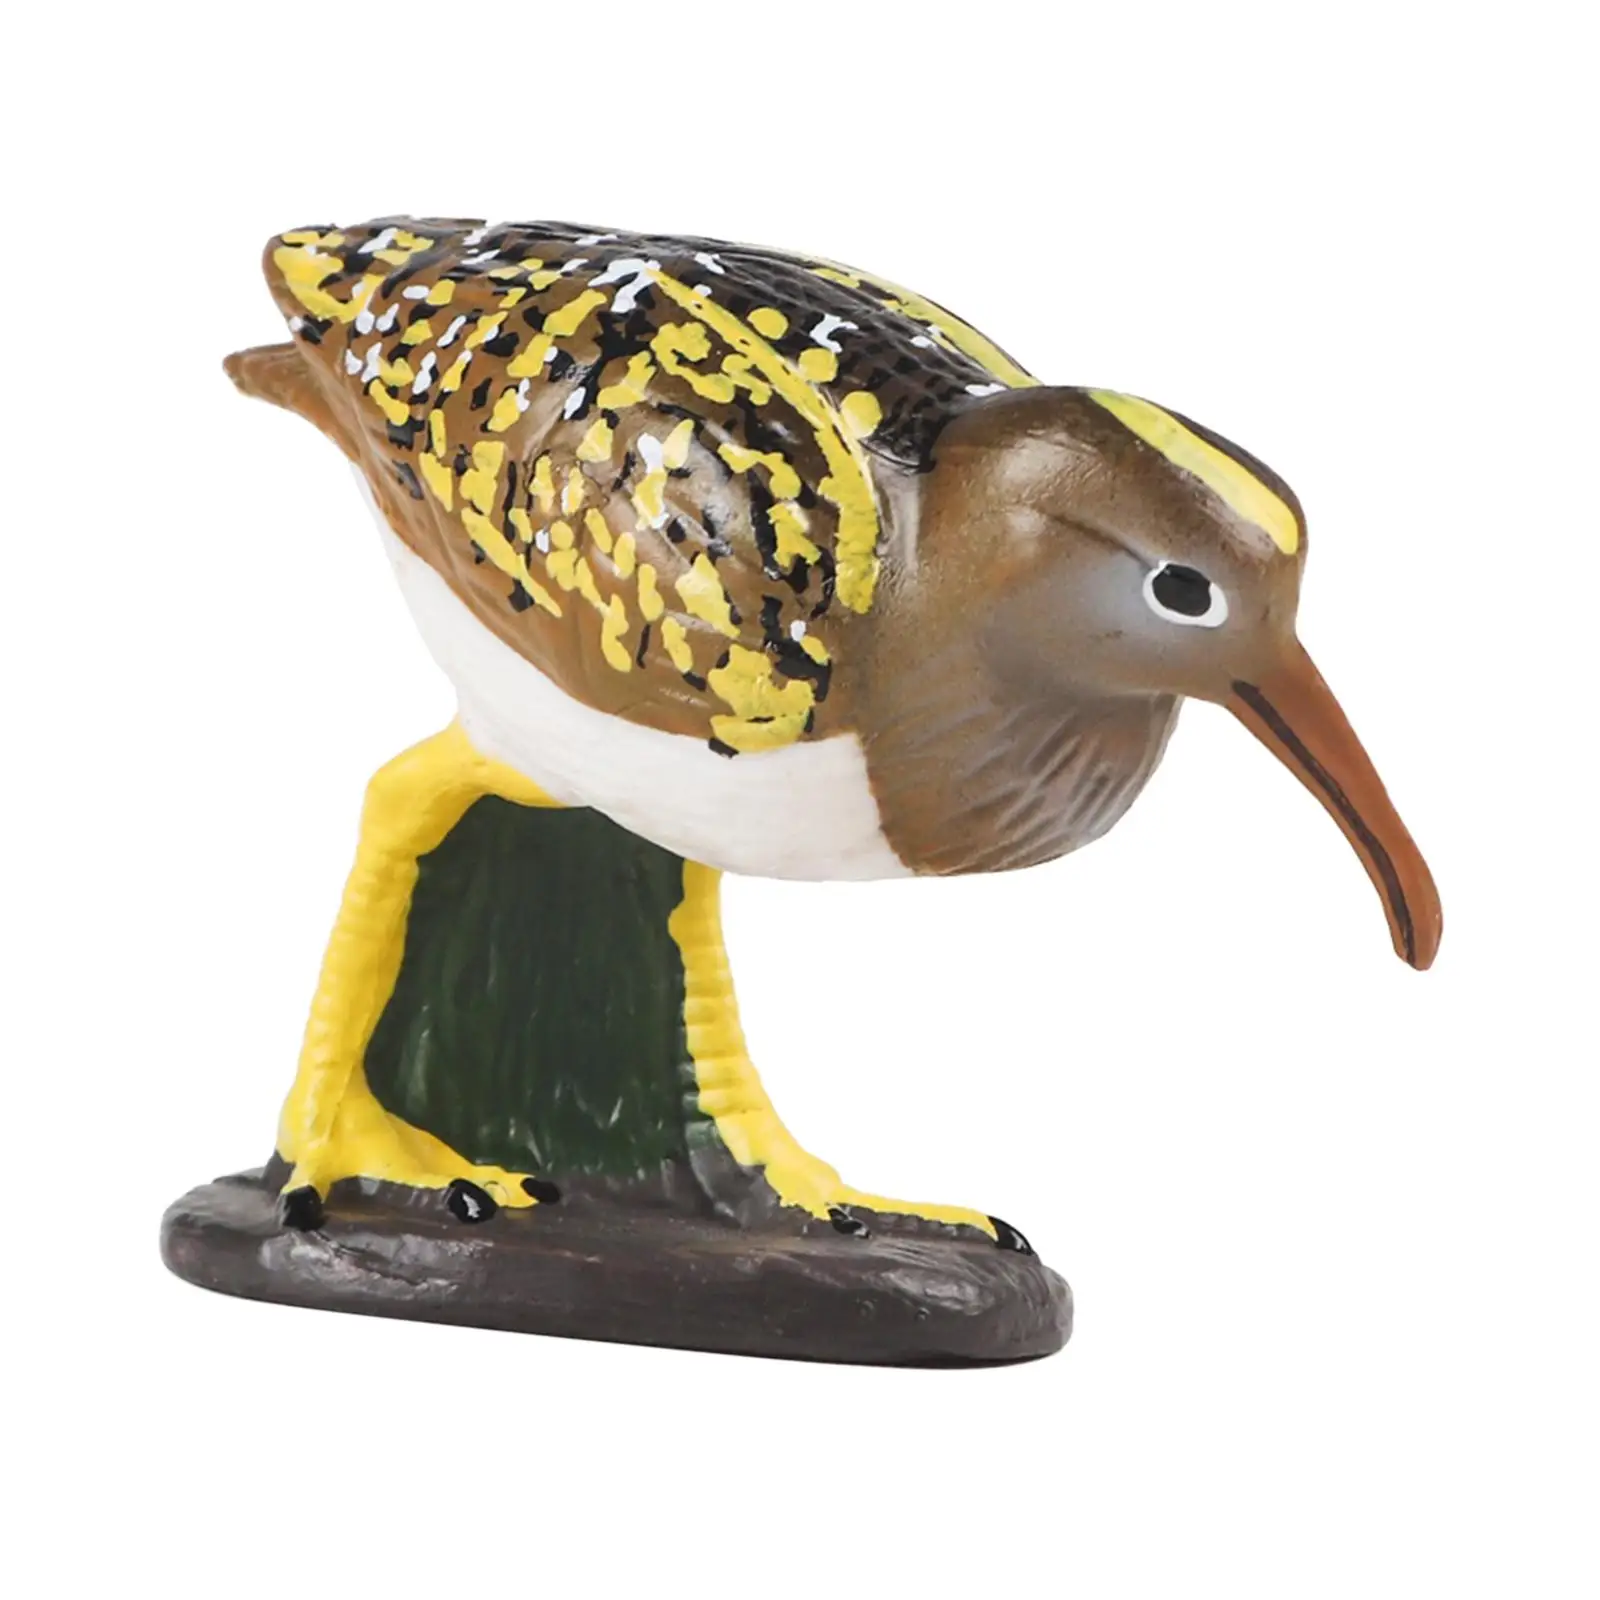 Simulated Bird Figurine Animal Figures Educational Learning Toys Fine Workmanship Ornament for Desktop Garden Patio Lawn Outdoor